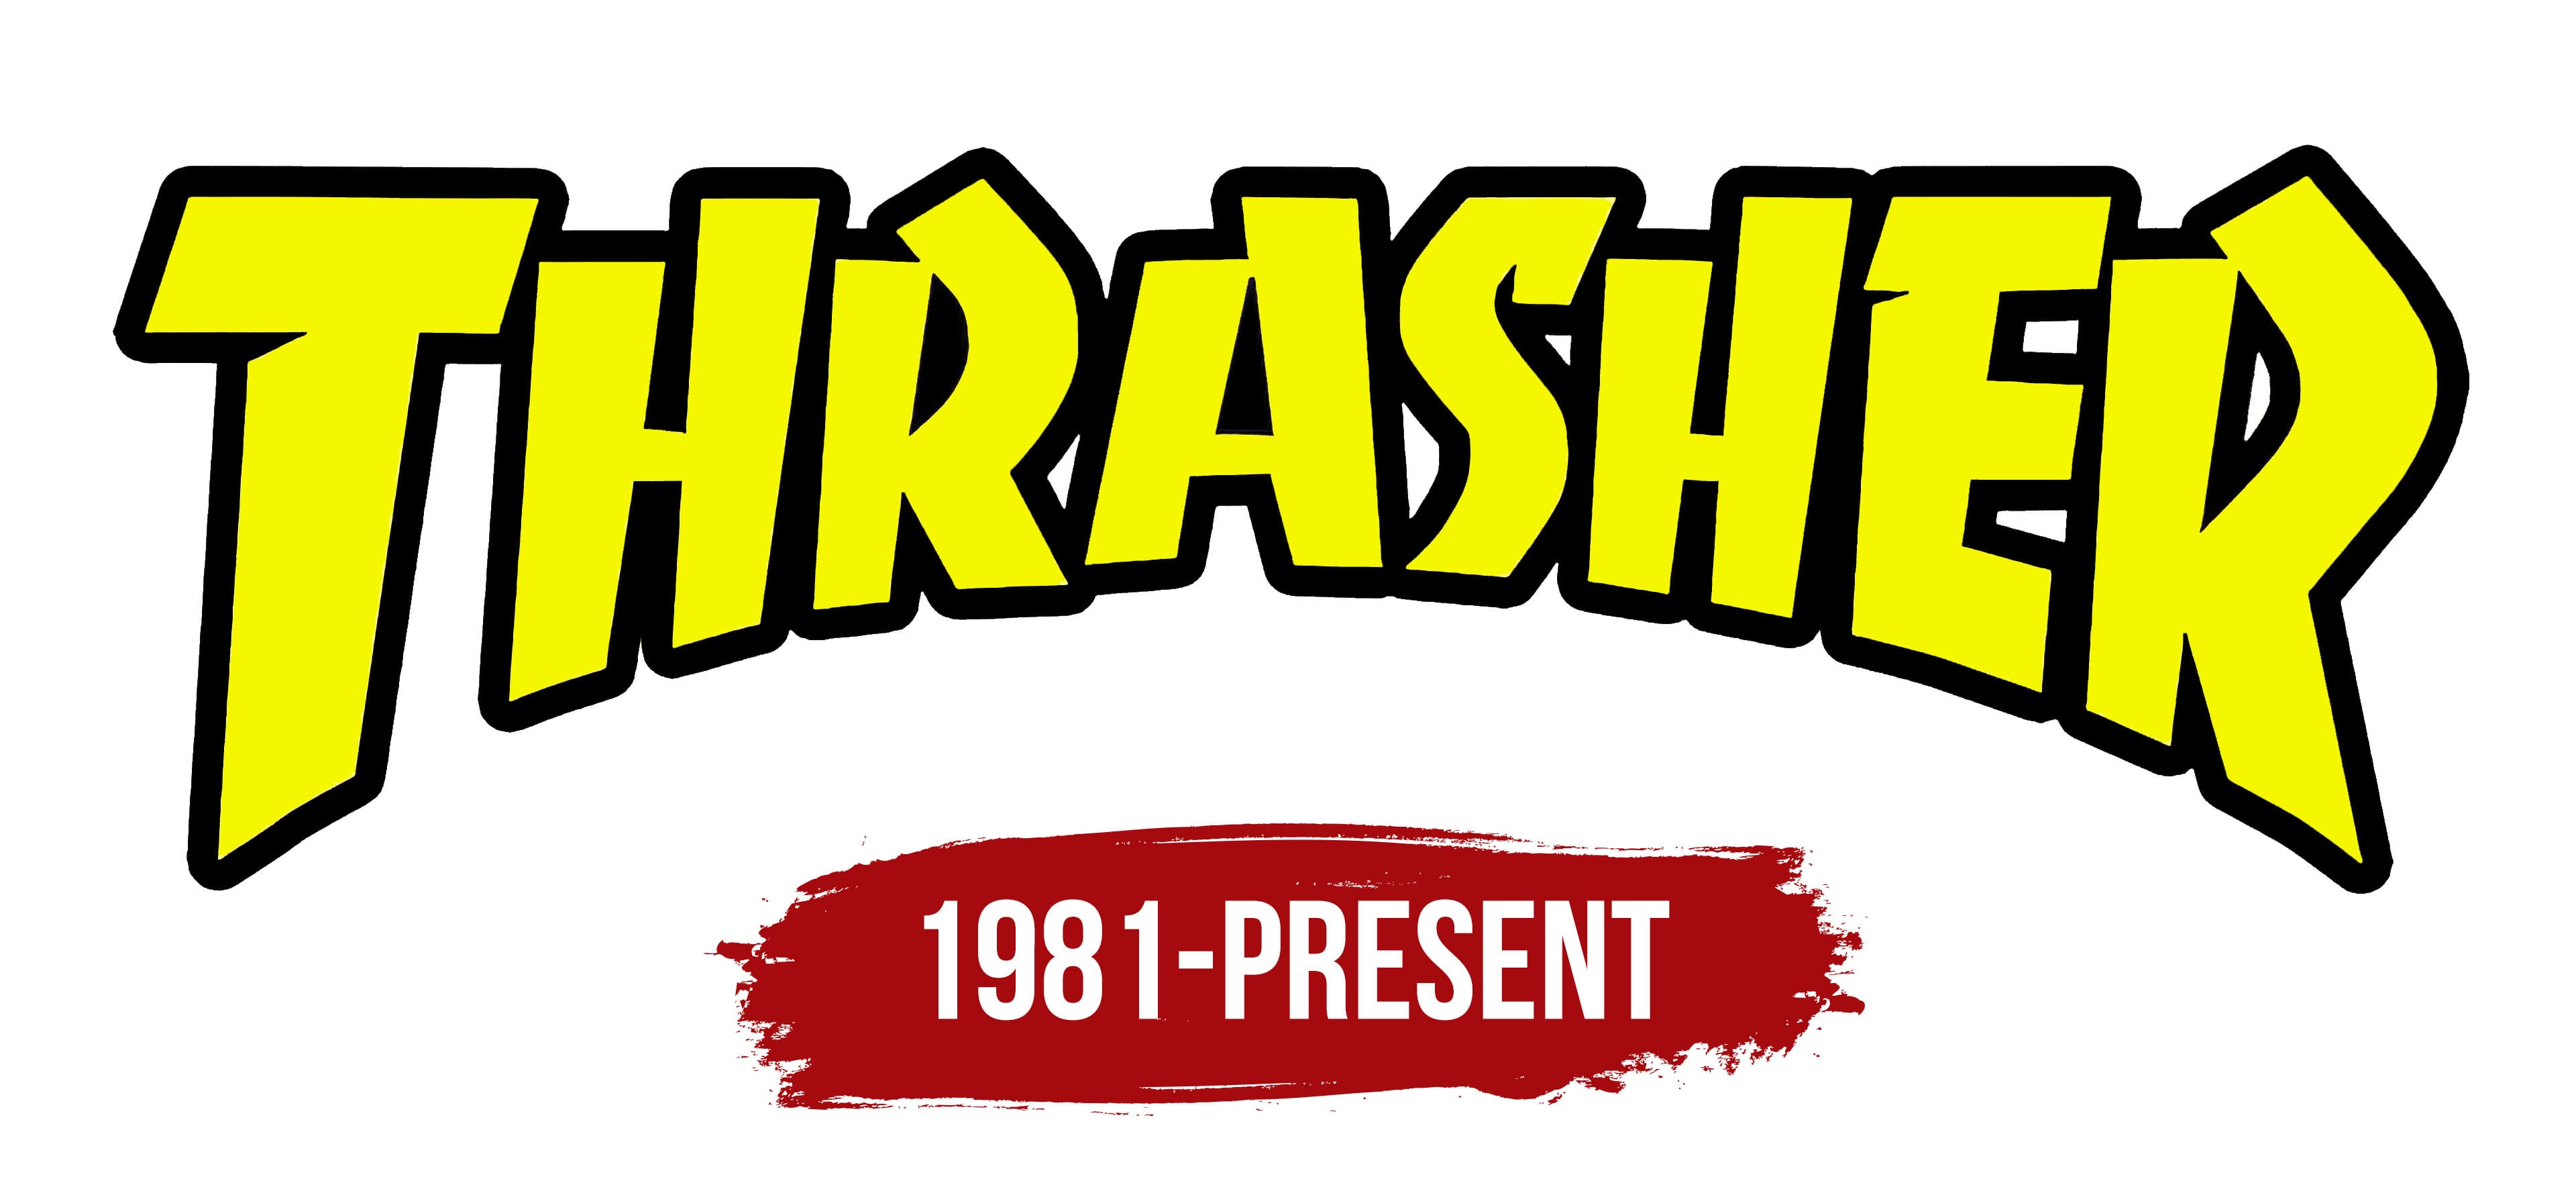 Create A Custom Thrasher Logo With Your Name By Ahmedzaki546 Fiverr ...